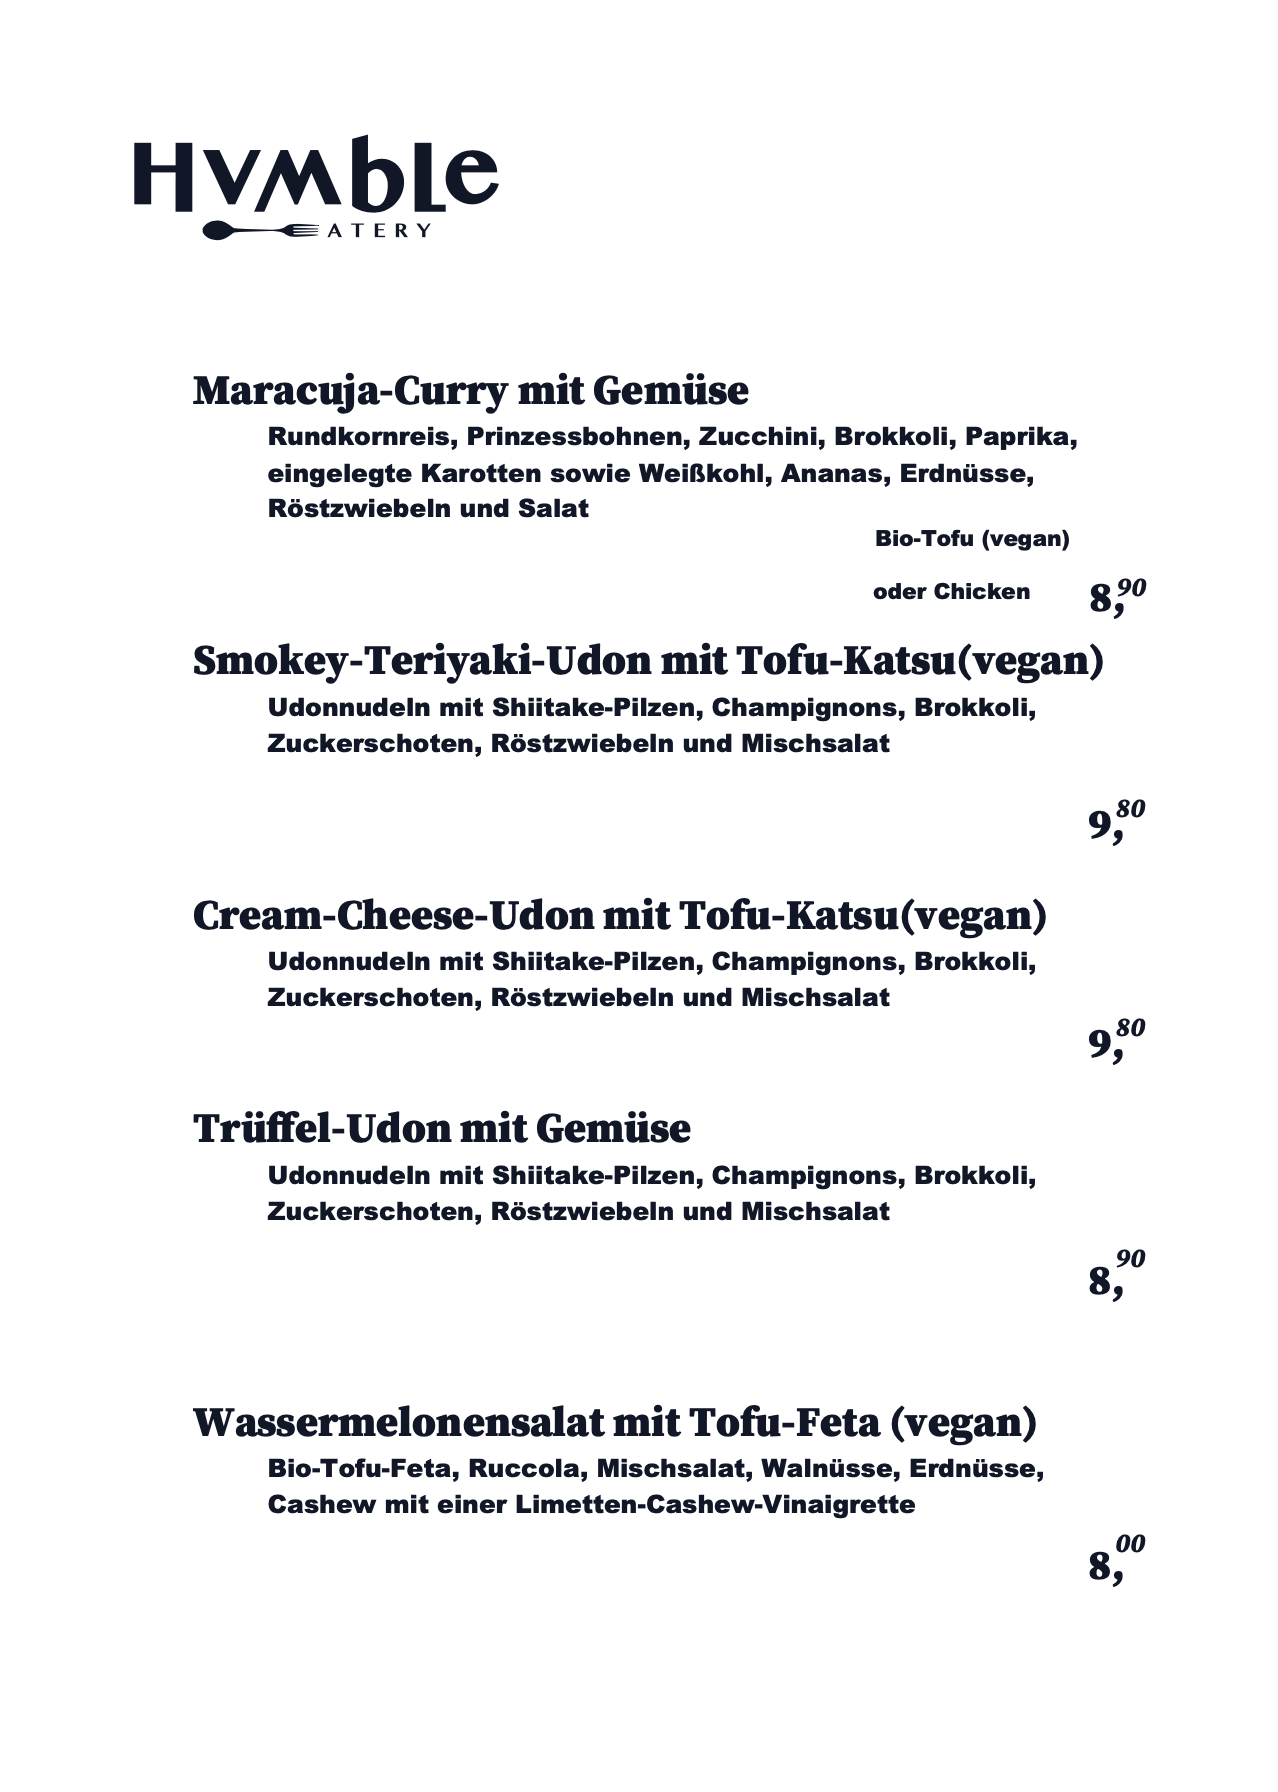 Humble Berlin Speisekarte 2 - vegan Curry, Udon Nudeln, veganes Restaurant Berlin Mitte Tiergarten Gleisdreieck